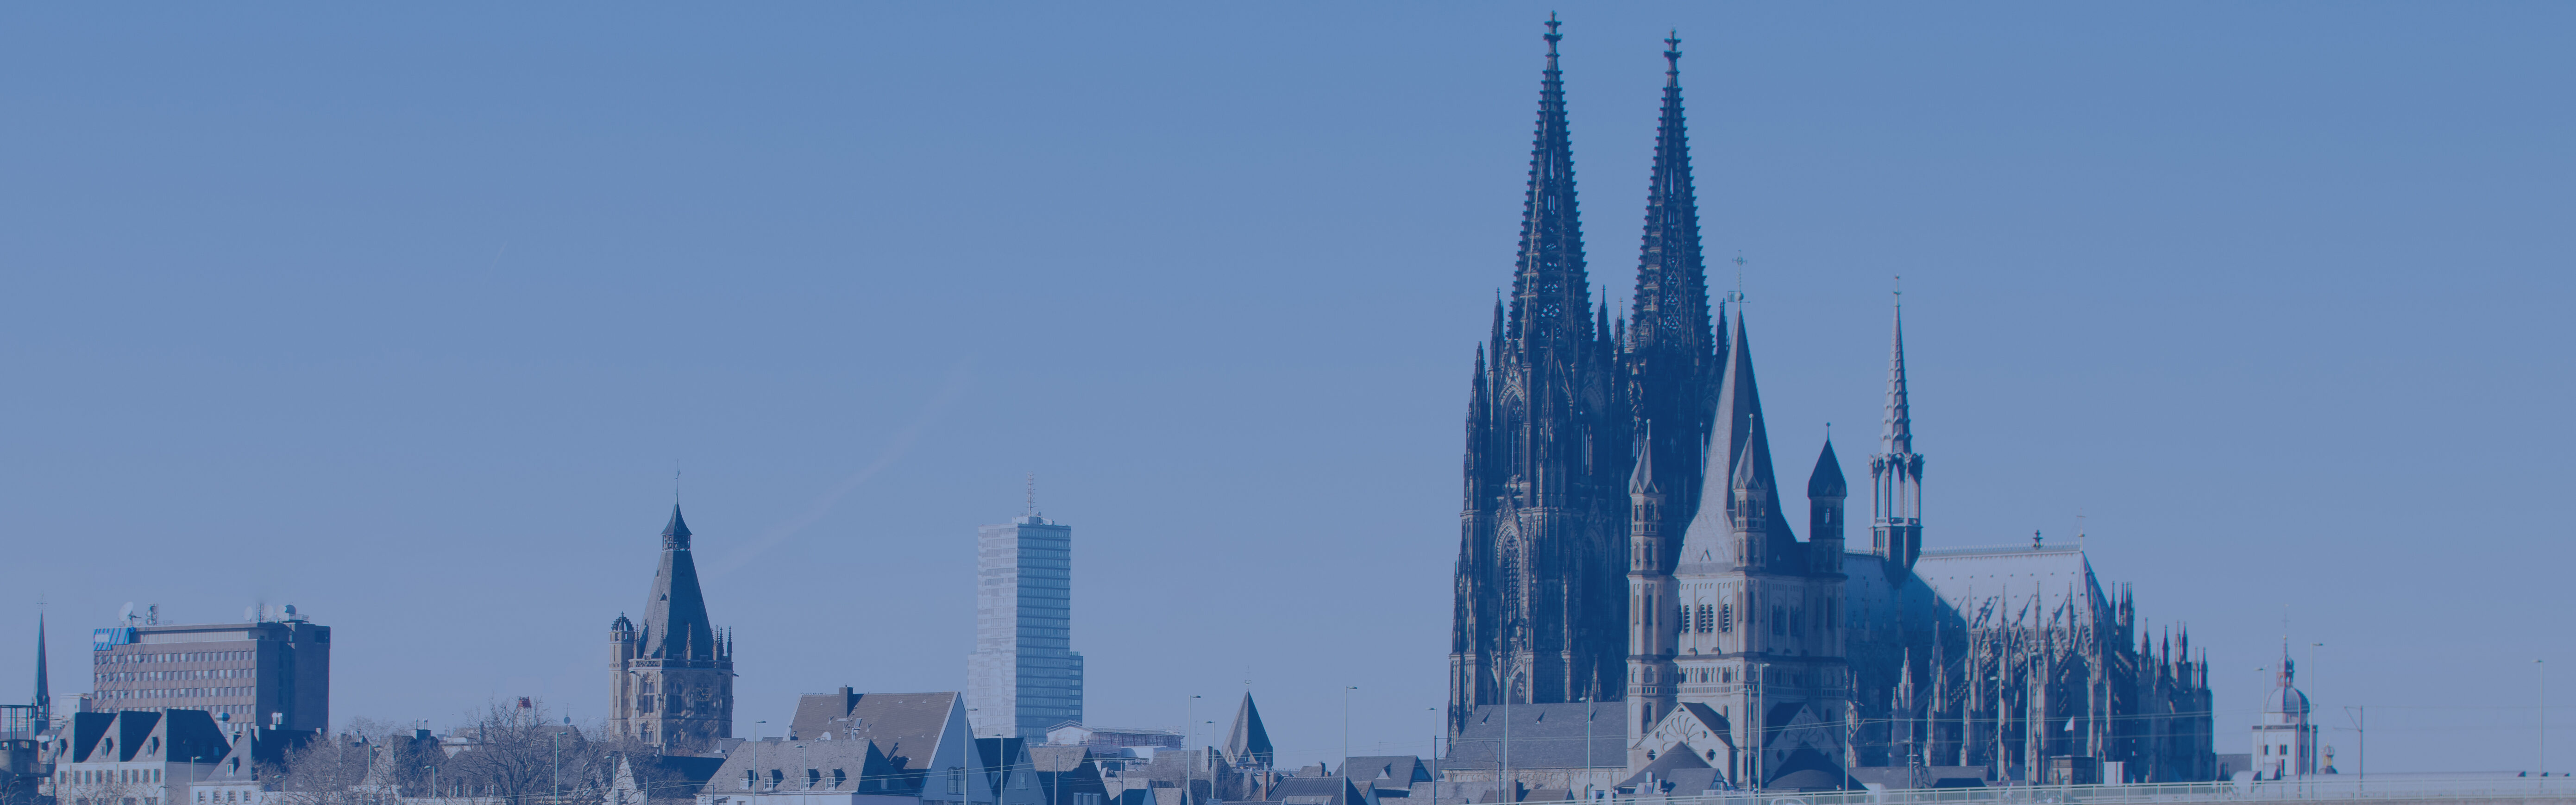 Köln Skyline mit dem Kölner Dom und dem Fernsehturm